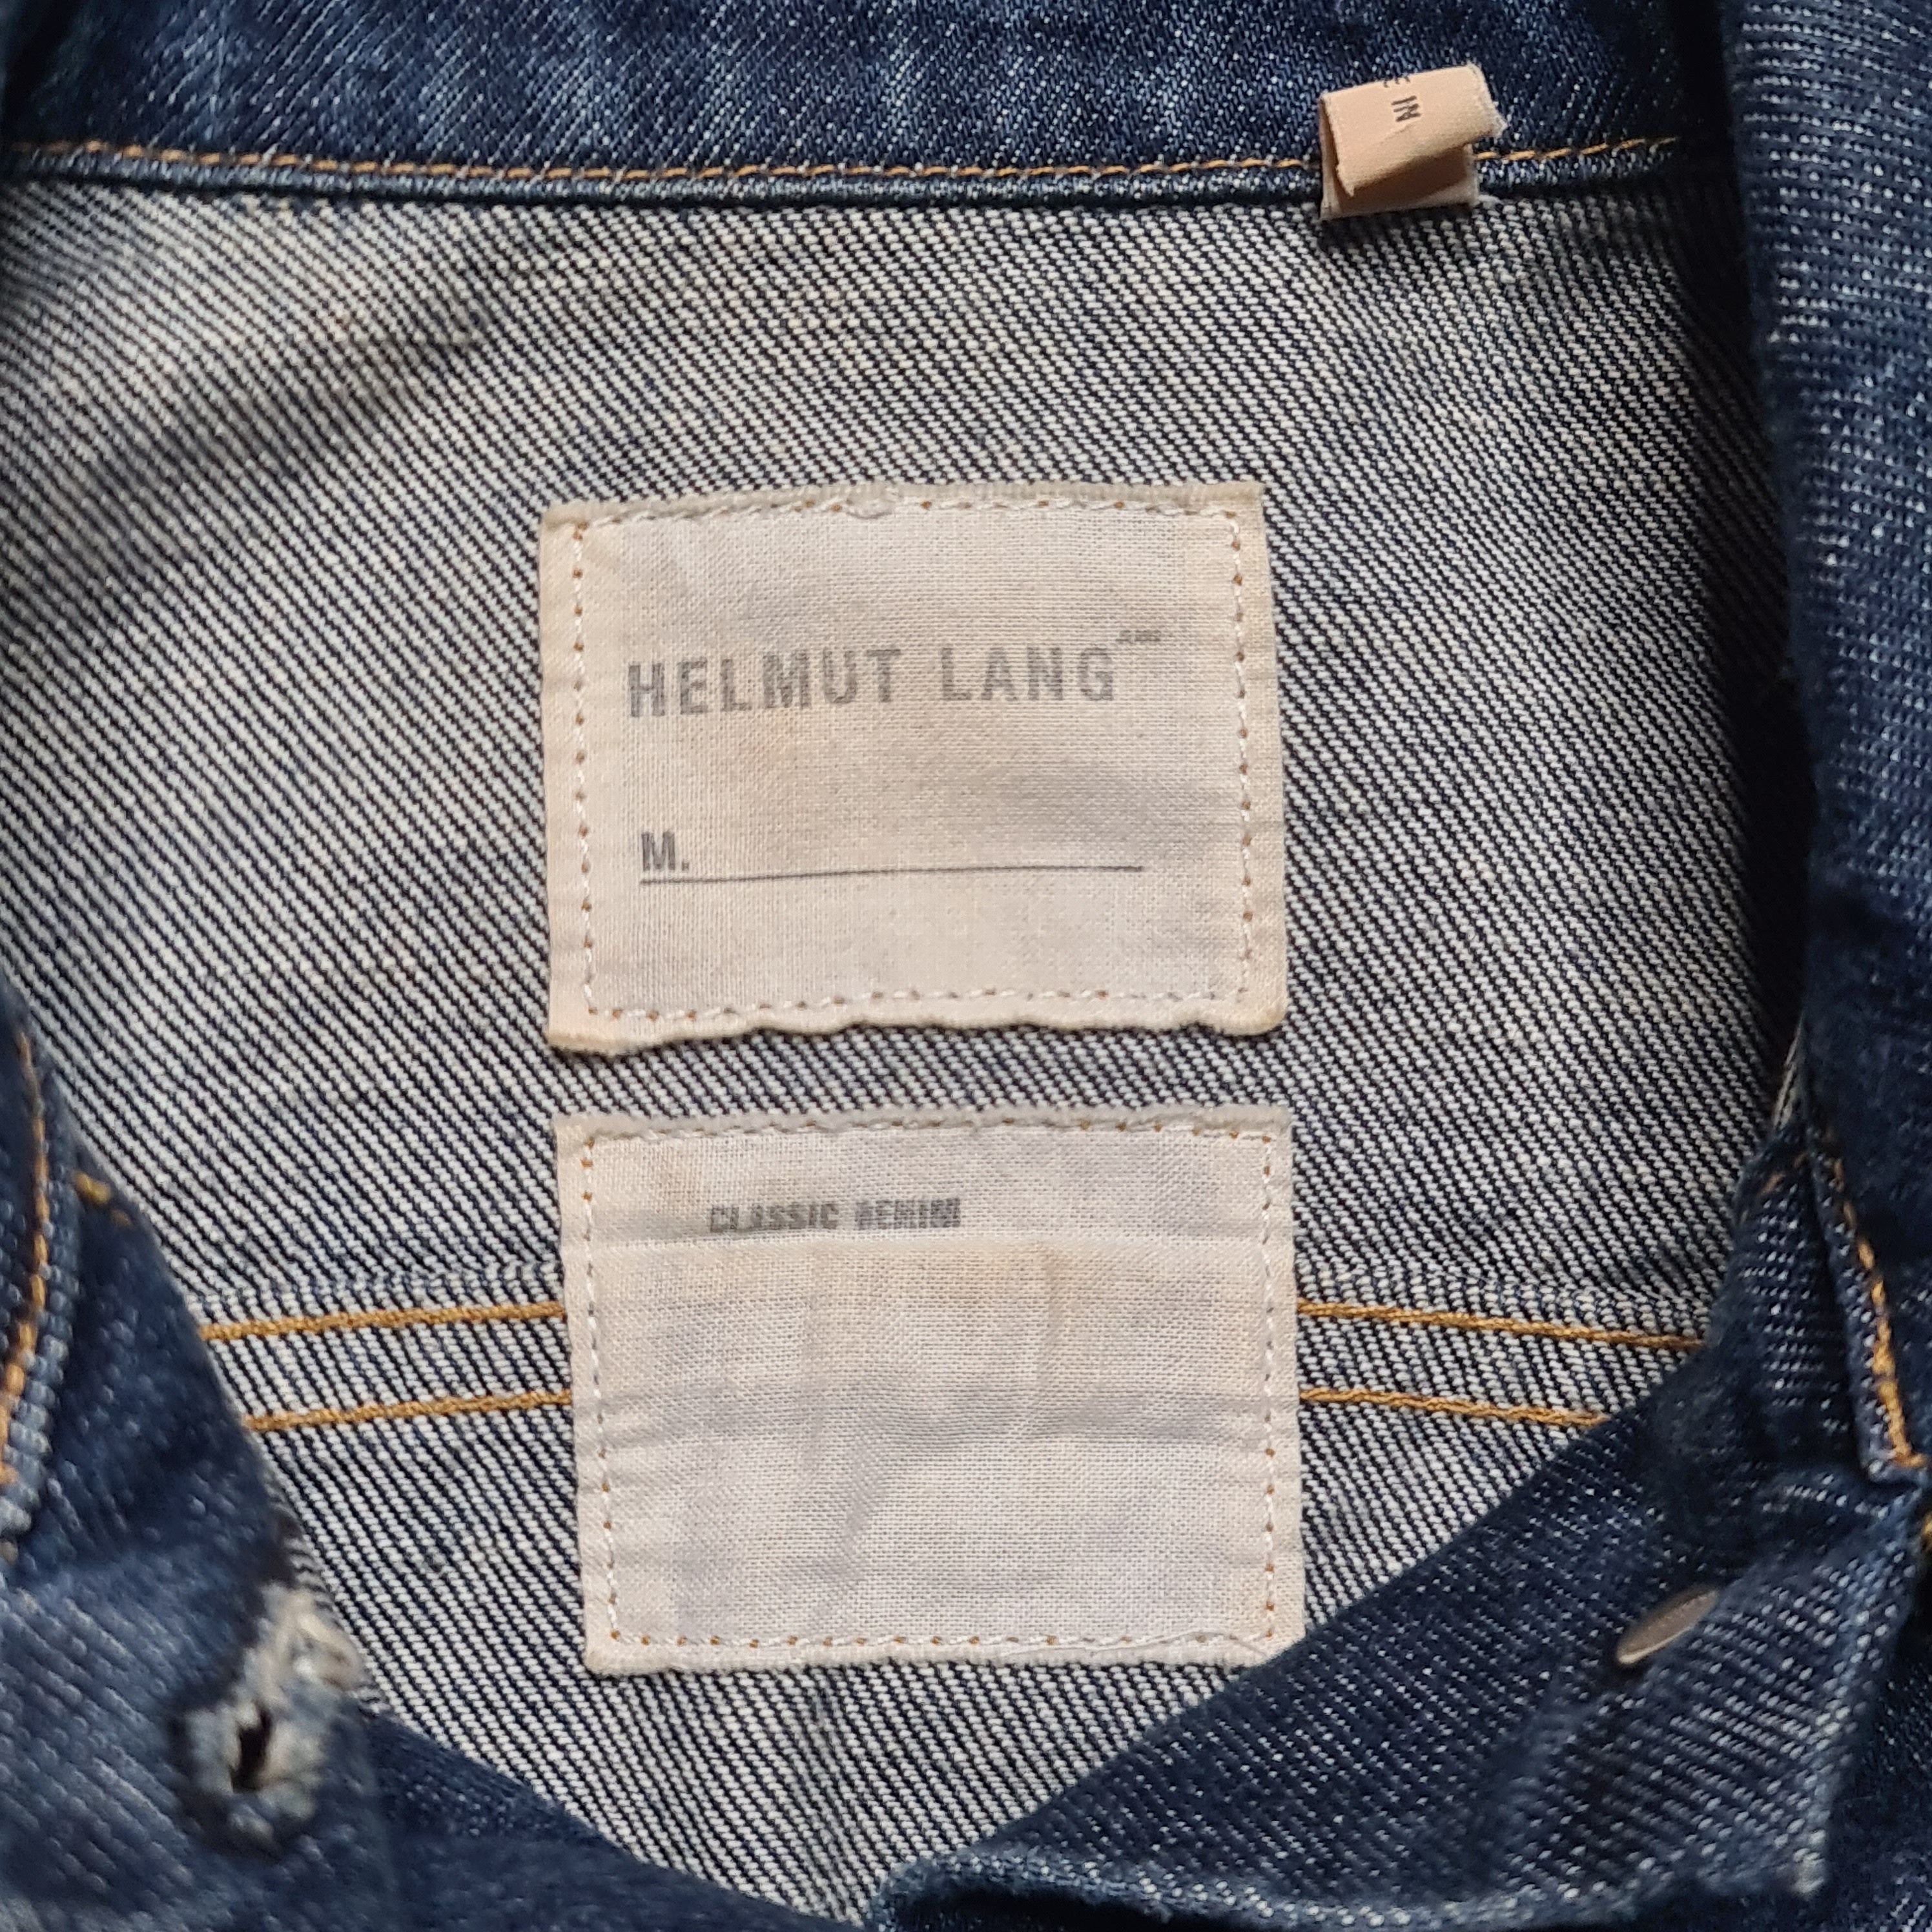 Helmut Lang - 1999 Turn-up Sleeve Trucker Jacket (Womens) - 5